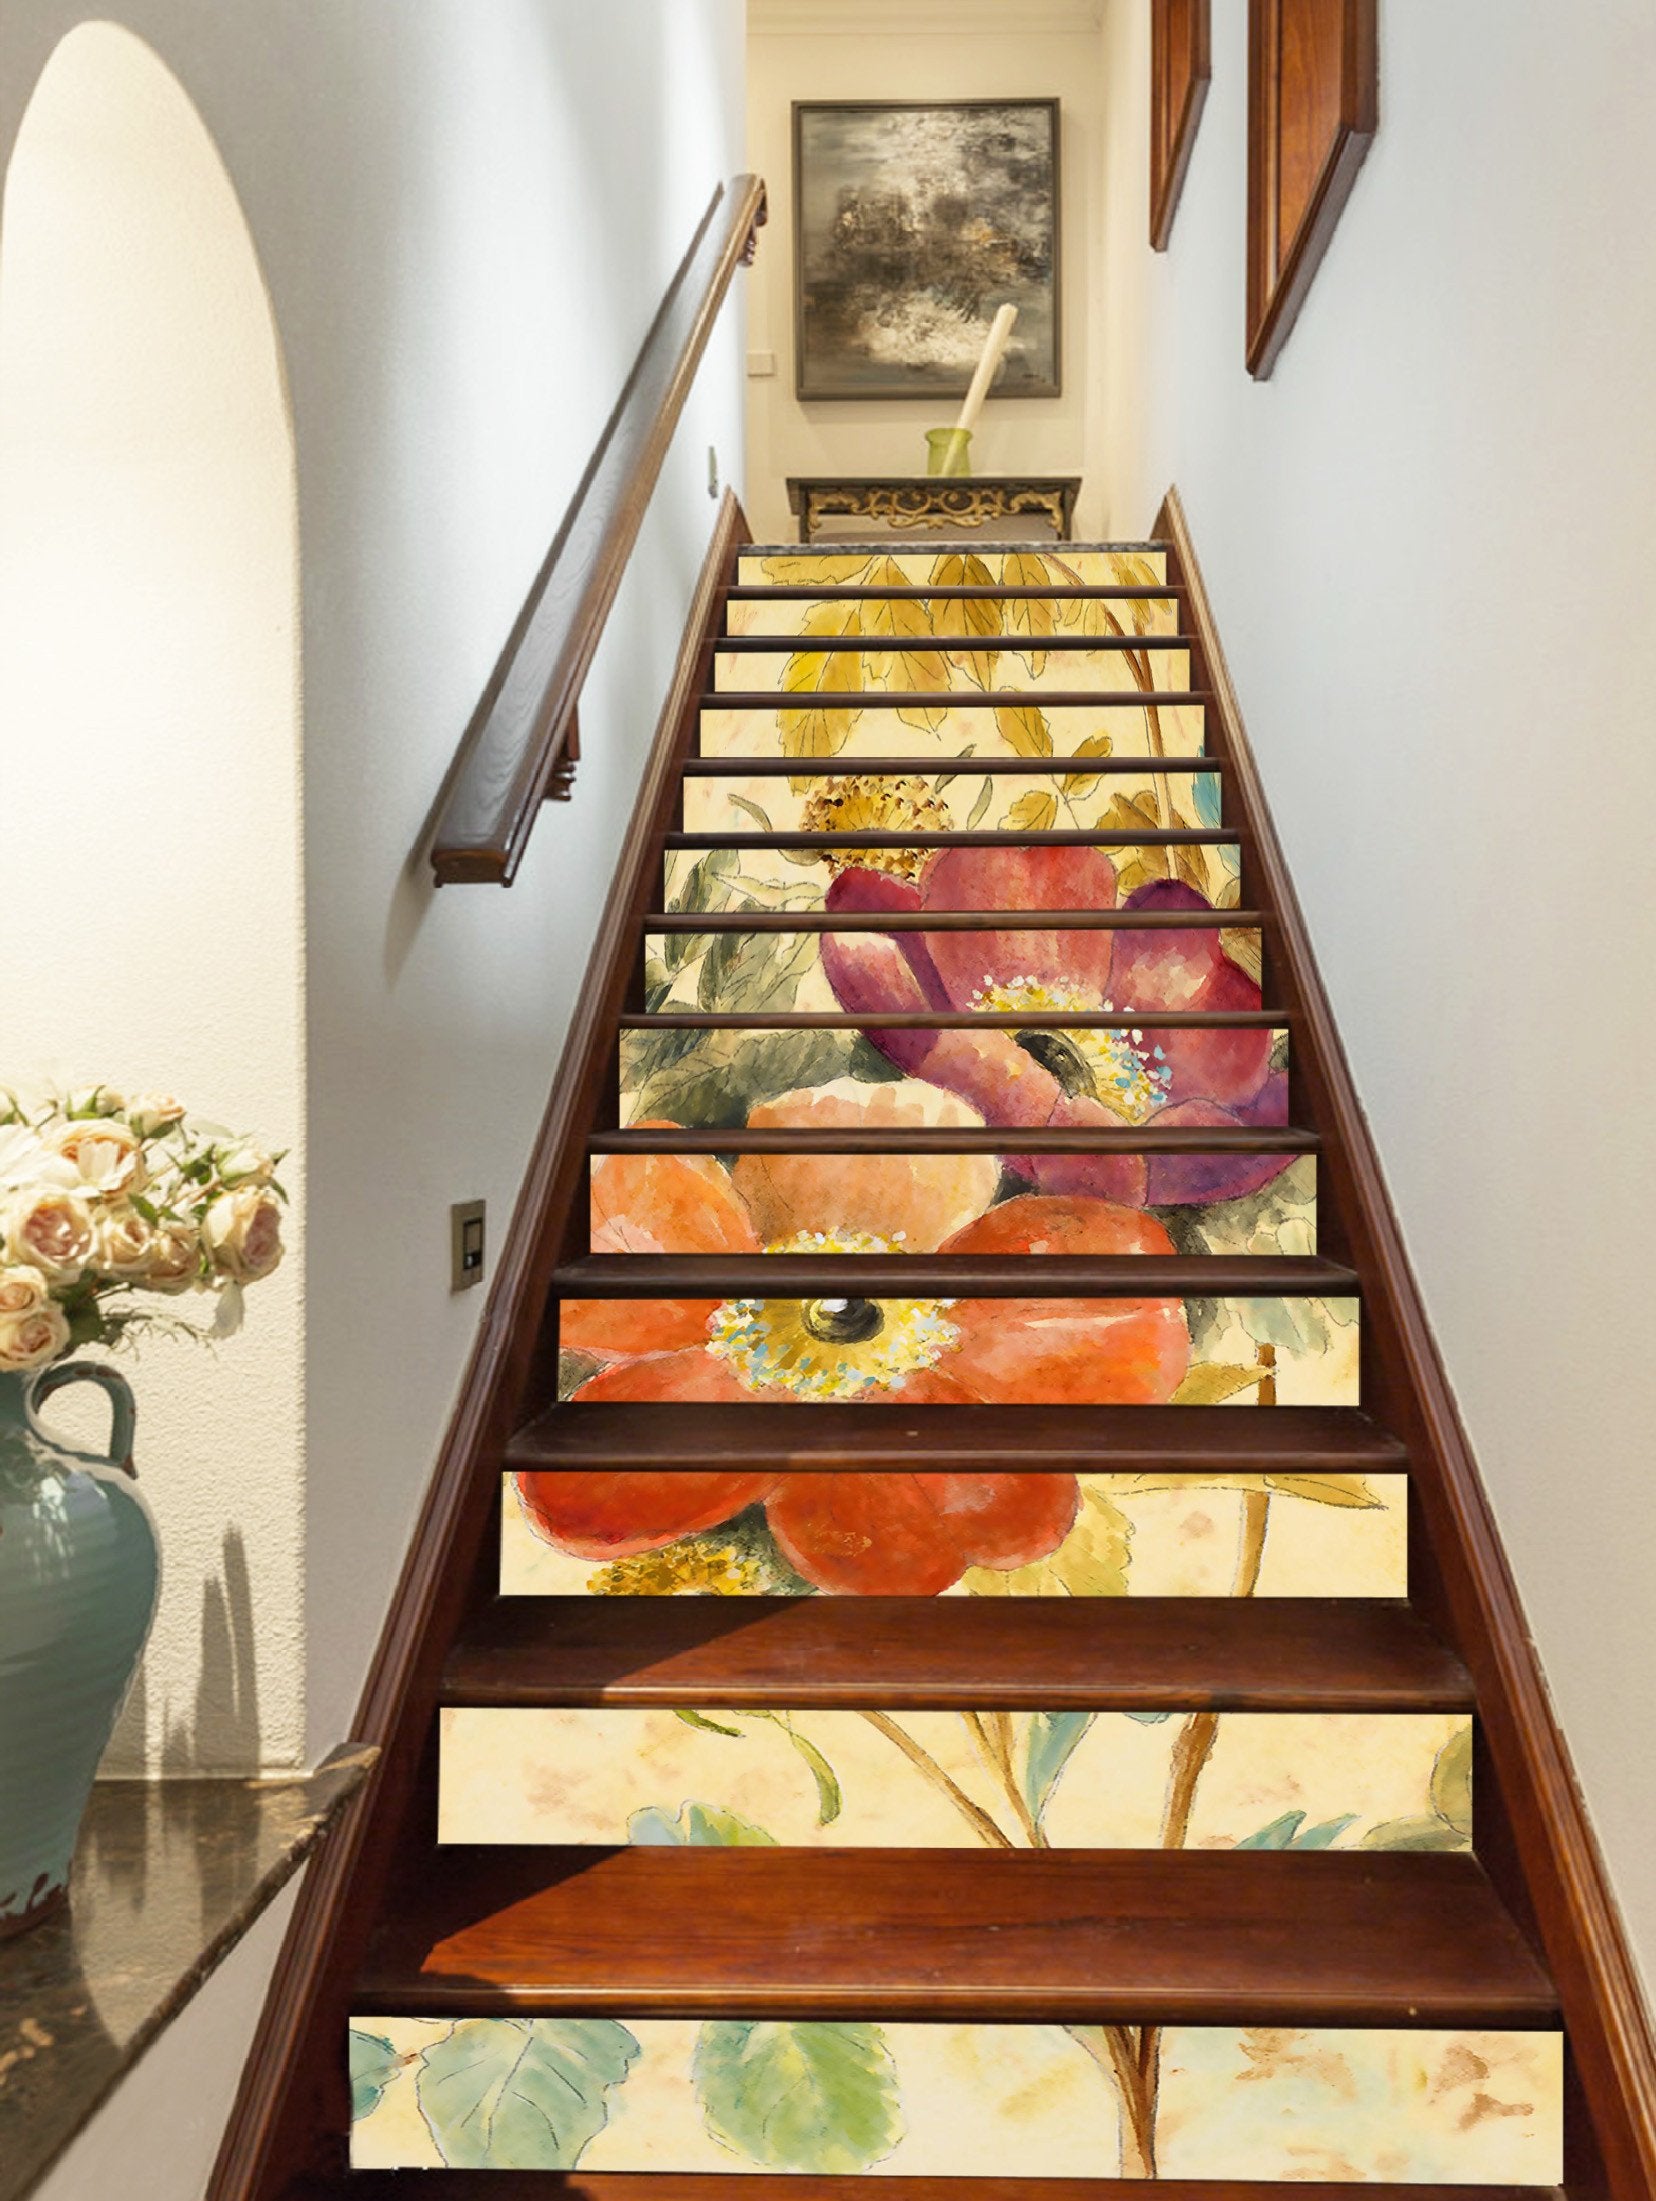 3D Flowers Painting 1165 Stair Risers Wallpaper AJ Wallpaper 